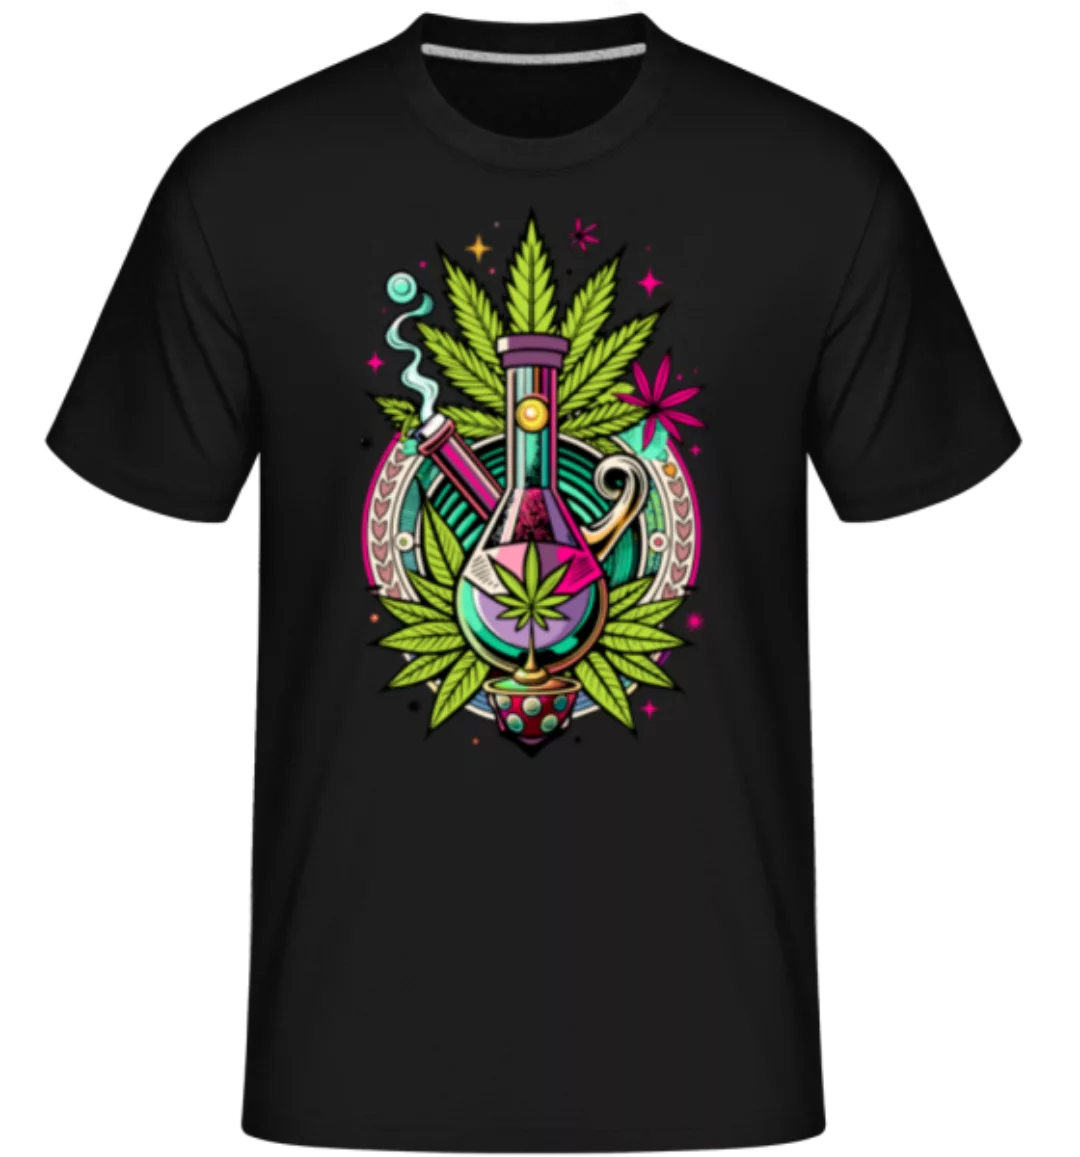 Cannabispfeife · Shirtinator Männer T-Shirt günstig online kaufen